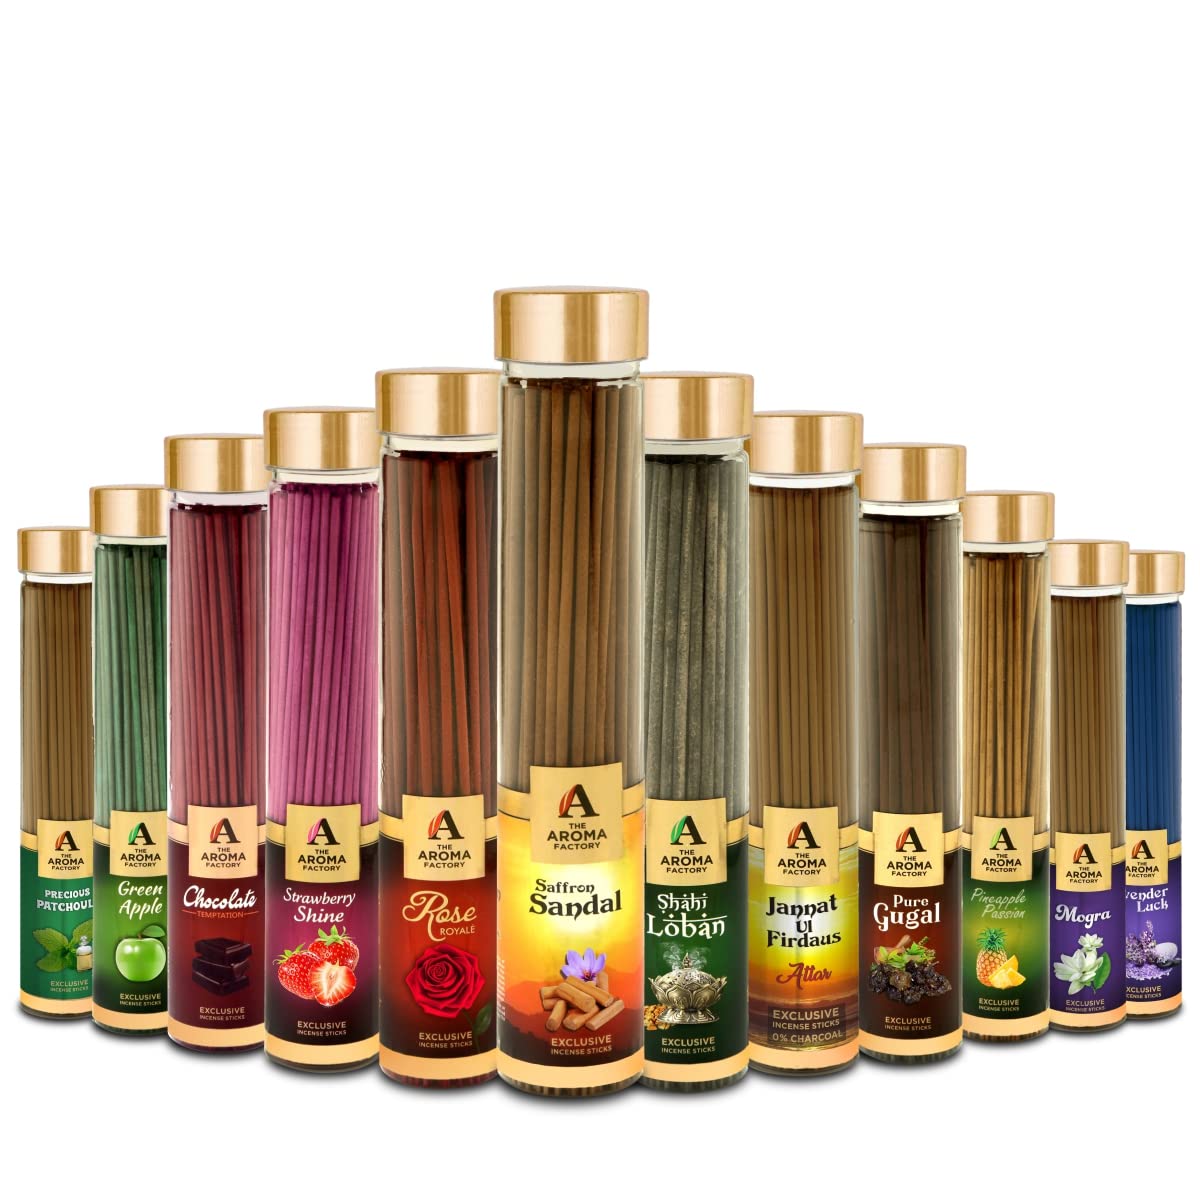 The Aroma Factory Loban & Mogra Agarbatti (Charcoal Free & Low Smoke) Bottle Pack of 2 x 100